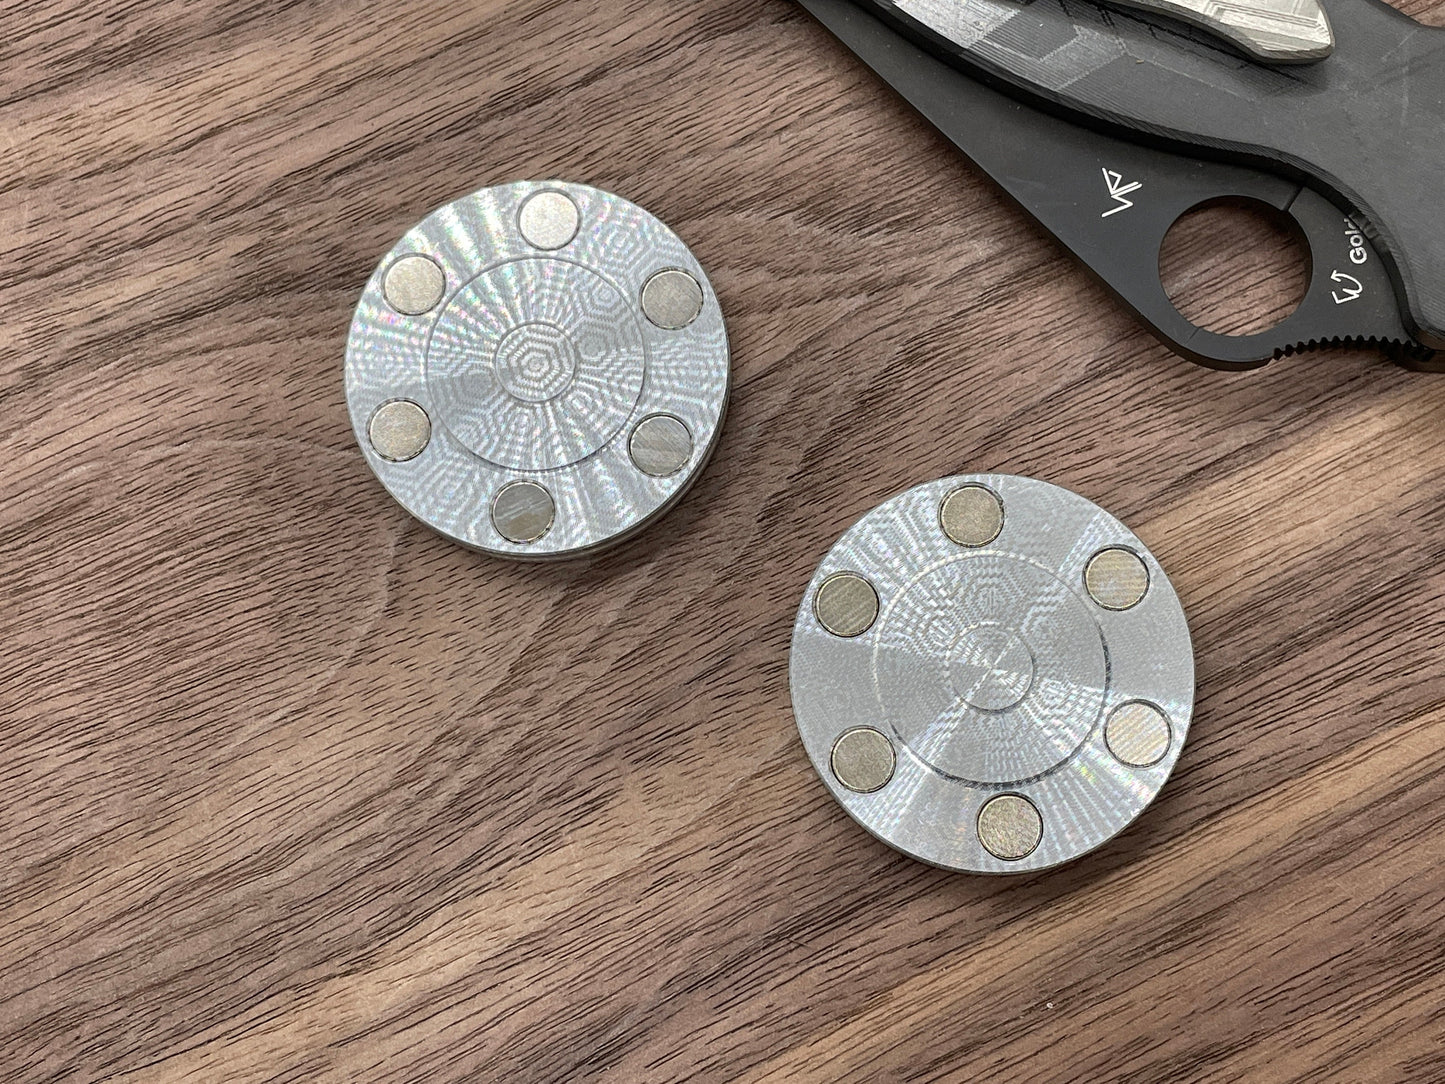 HAPTIC Coins CLICKY BEAR Damasteel pattern Alu Fidget